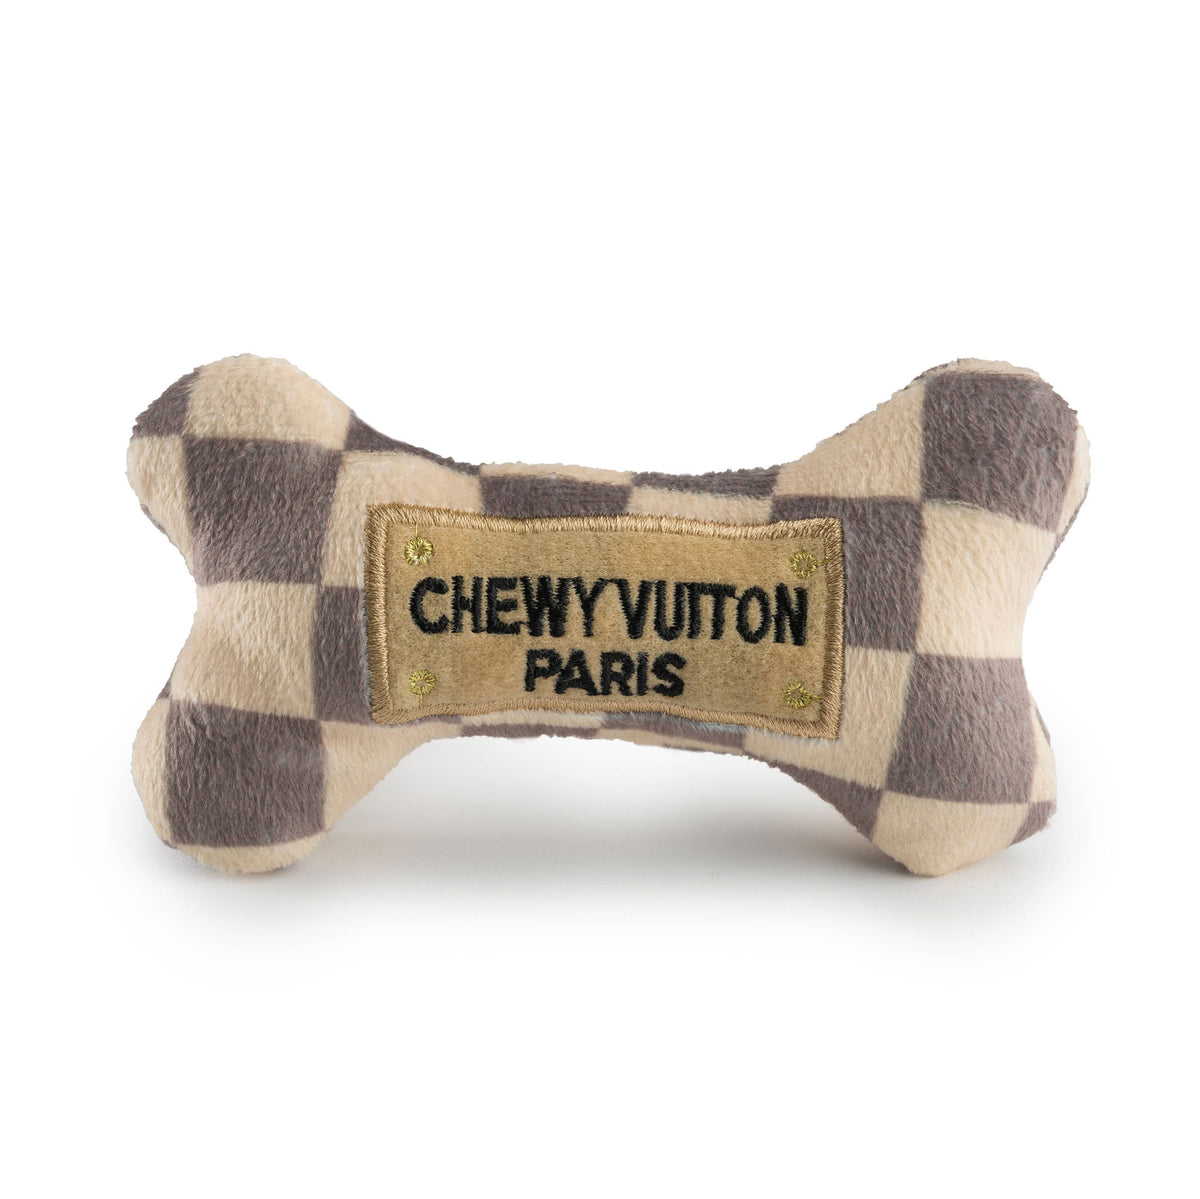 Chewy Checker Dog Bone Toy - Puppy Kisses